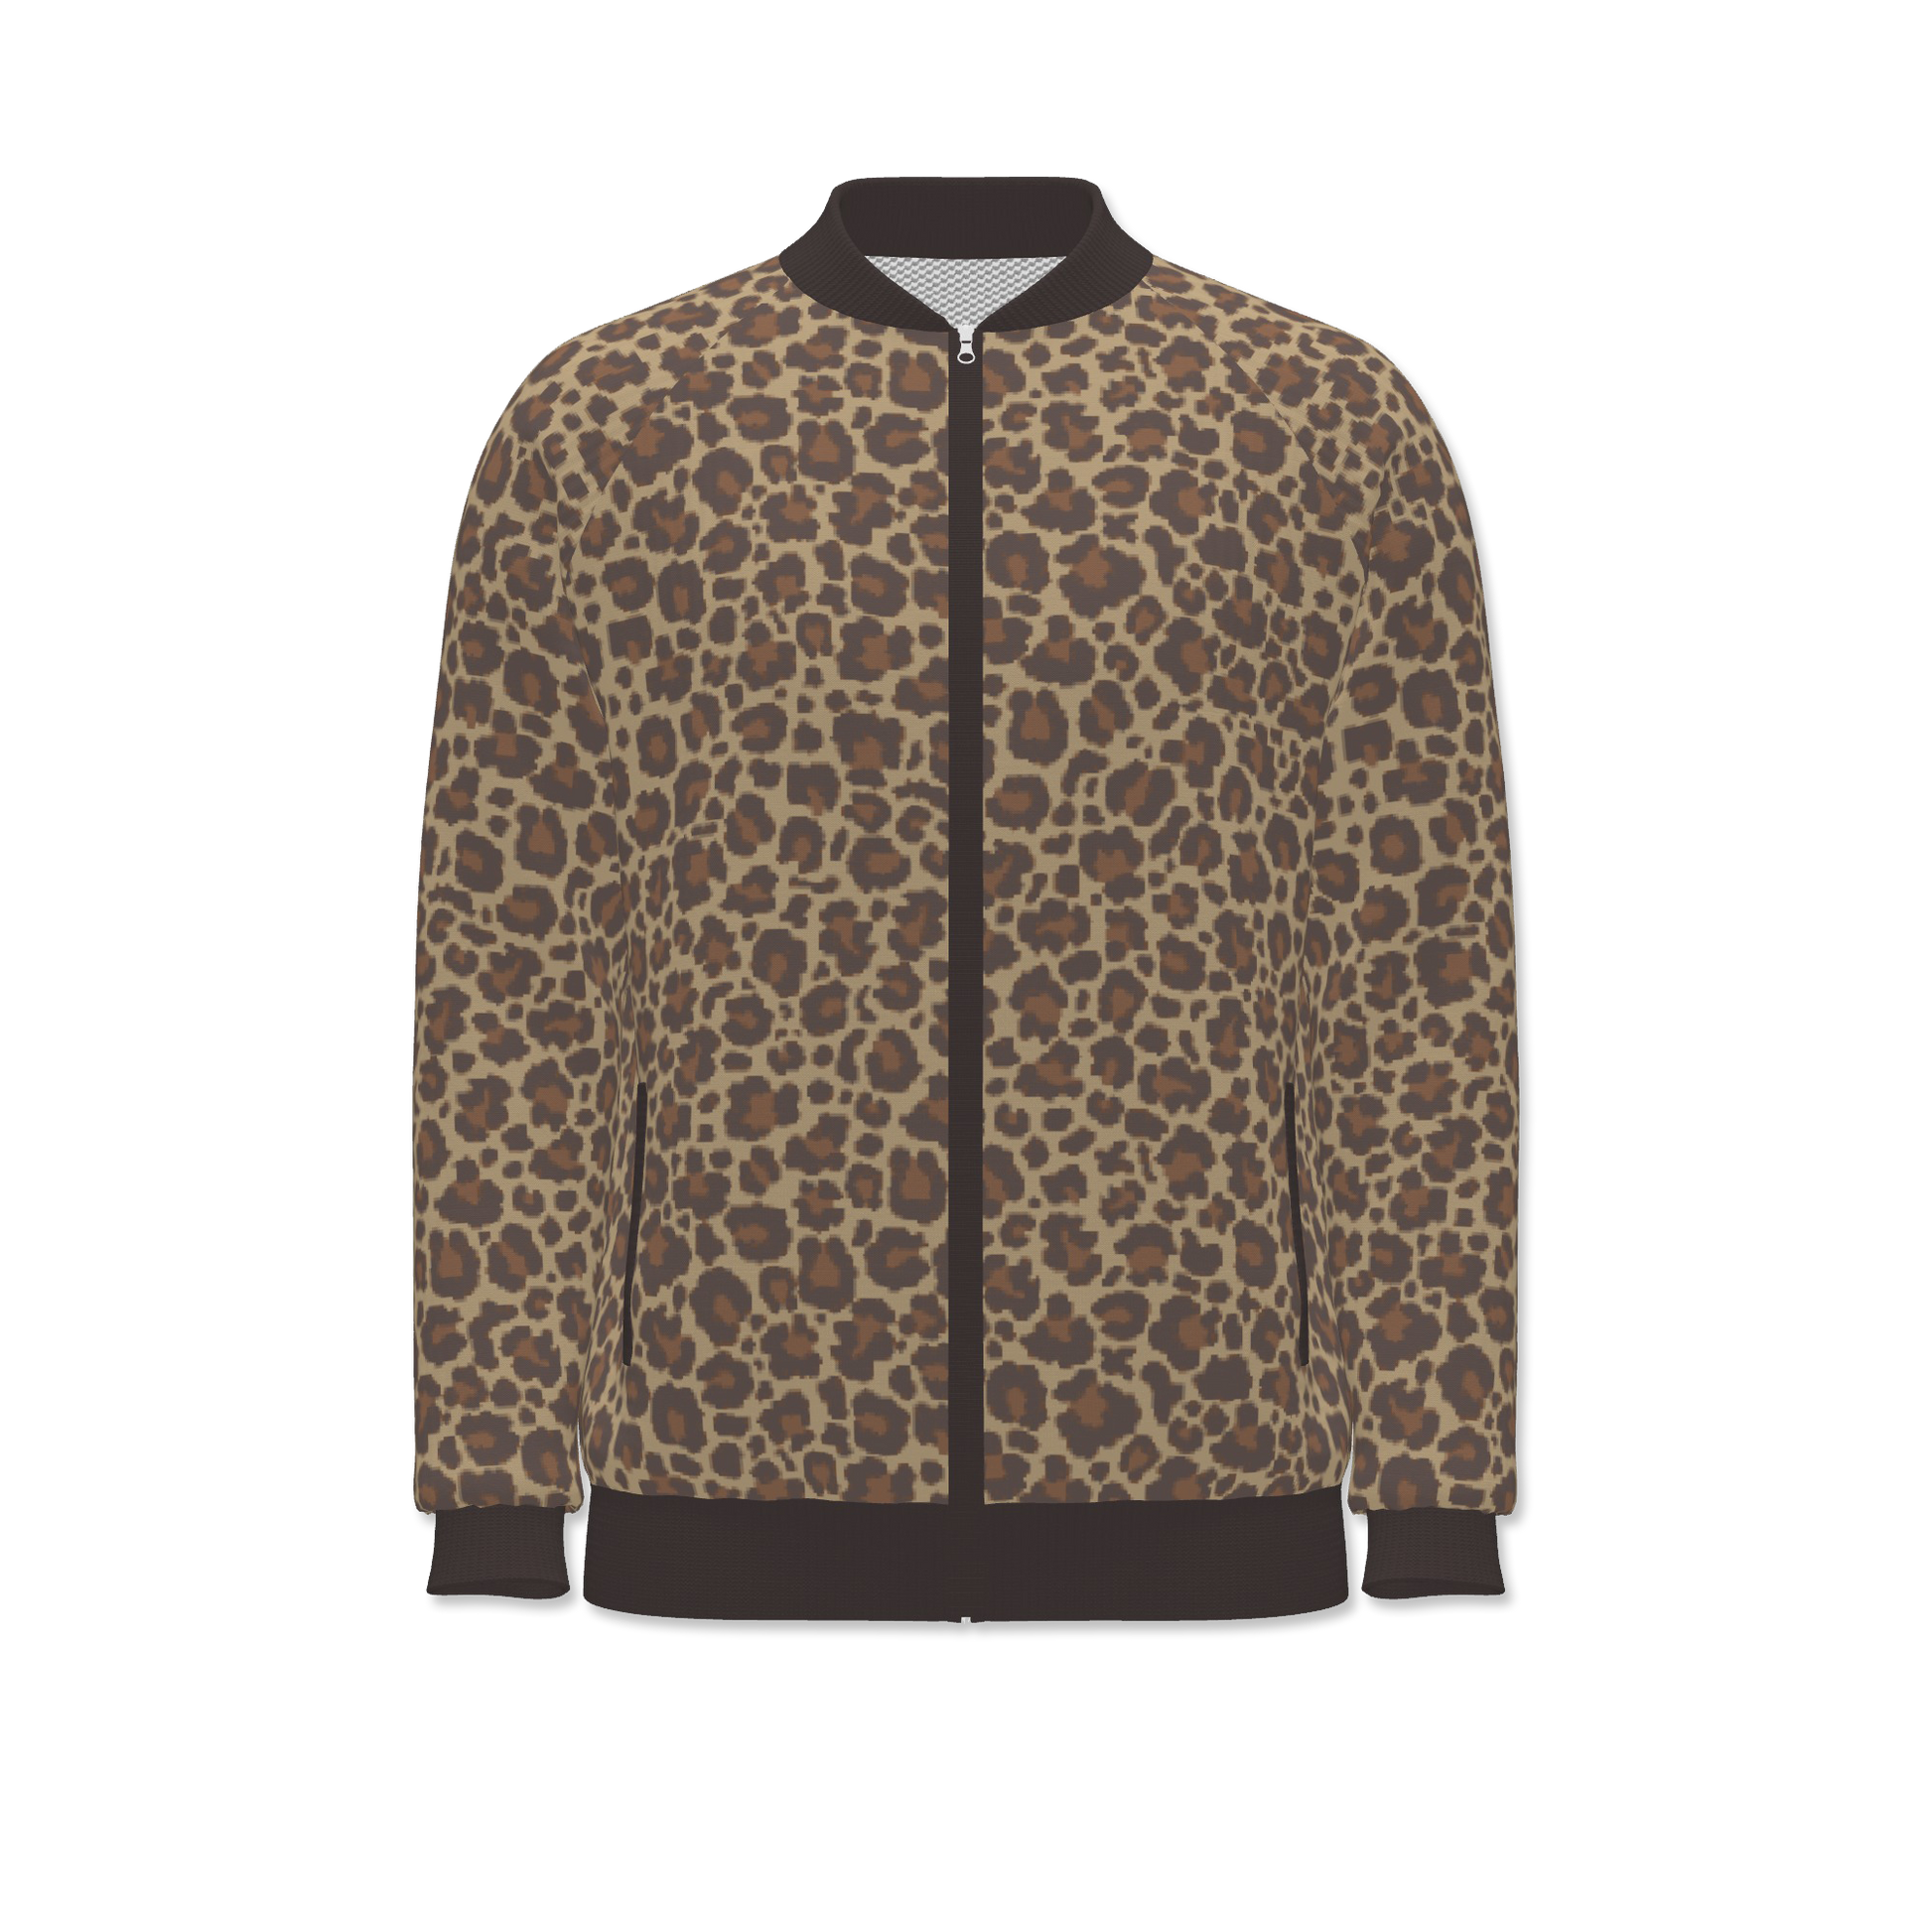 Leopard Lounge Men's Zipped Bomber Jacket by Studio Ten Design